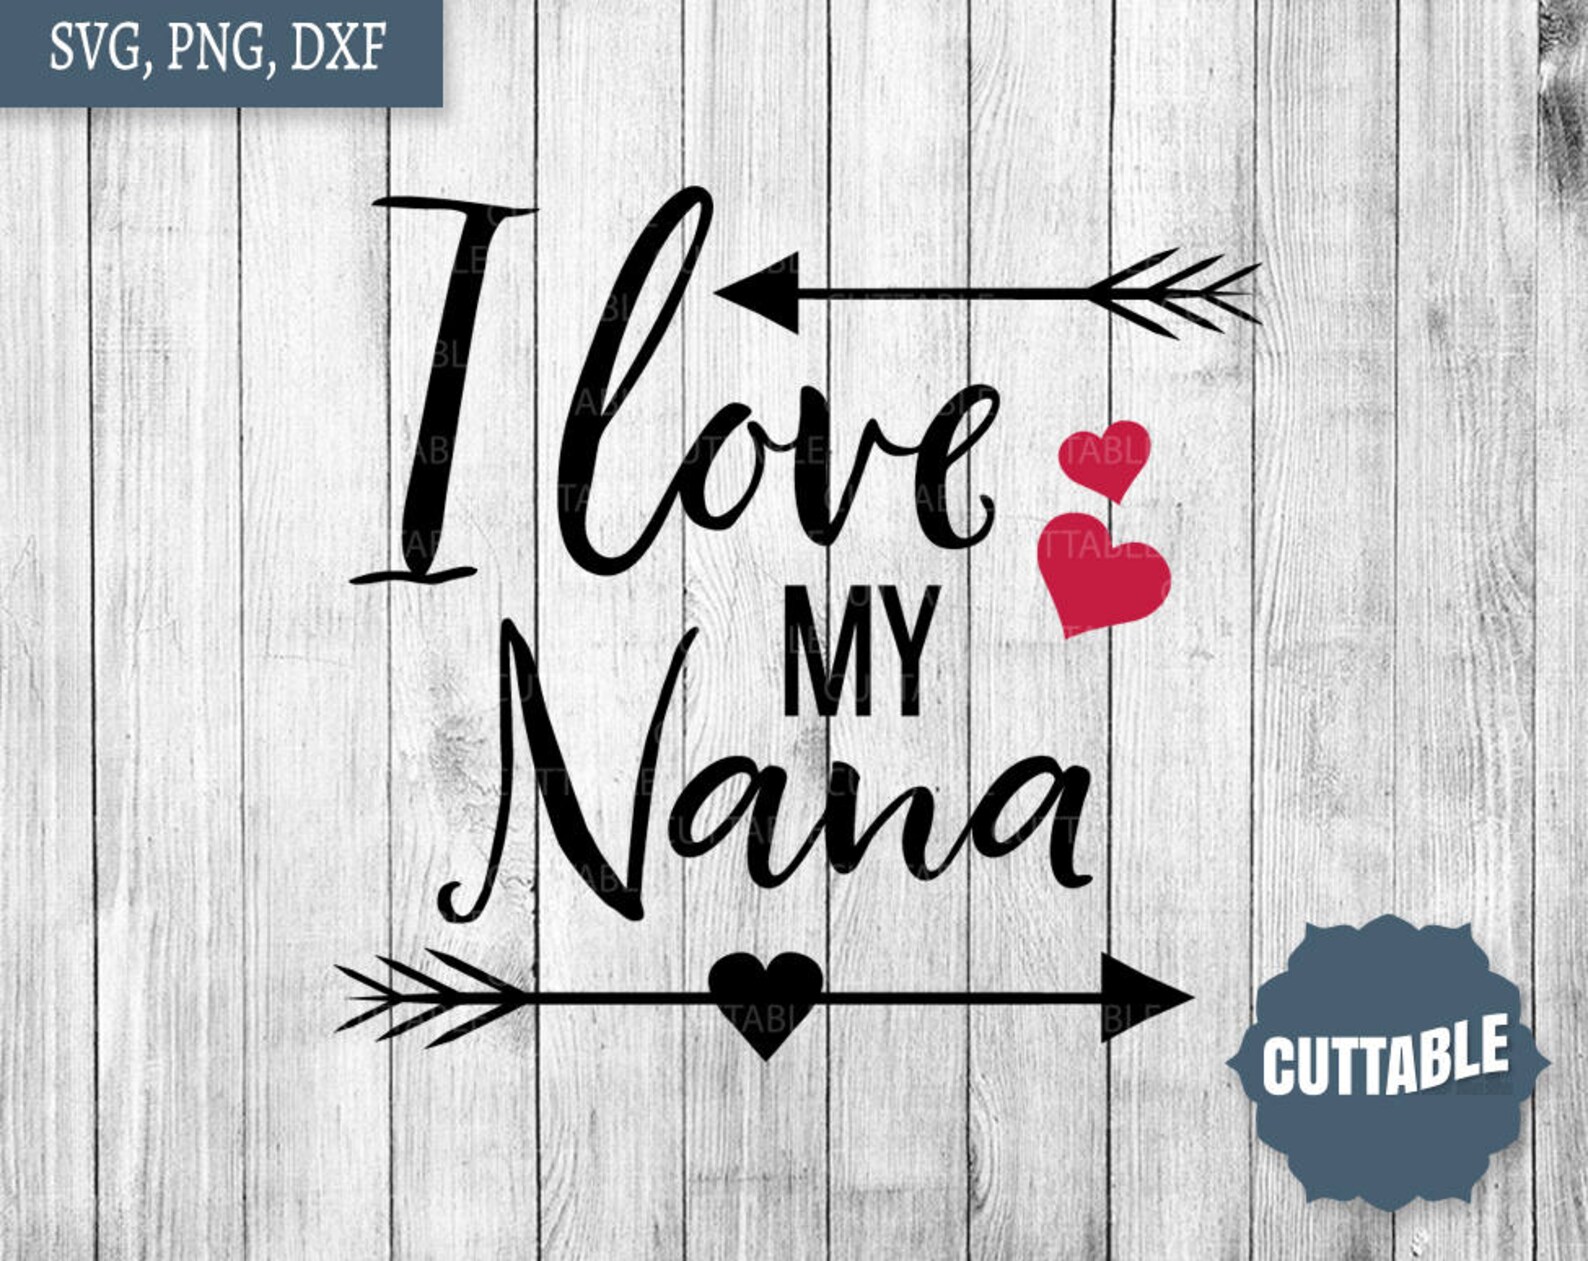 I love my nana svg cut file nana's quote svg for cricut image 0.